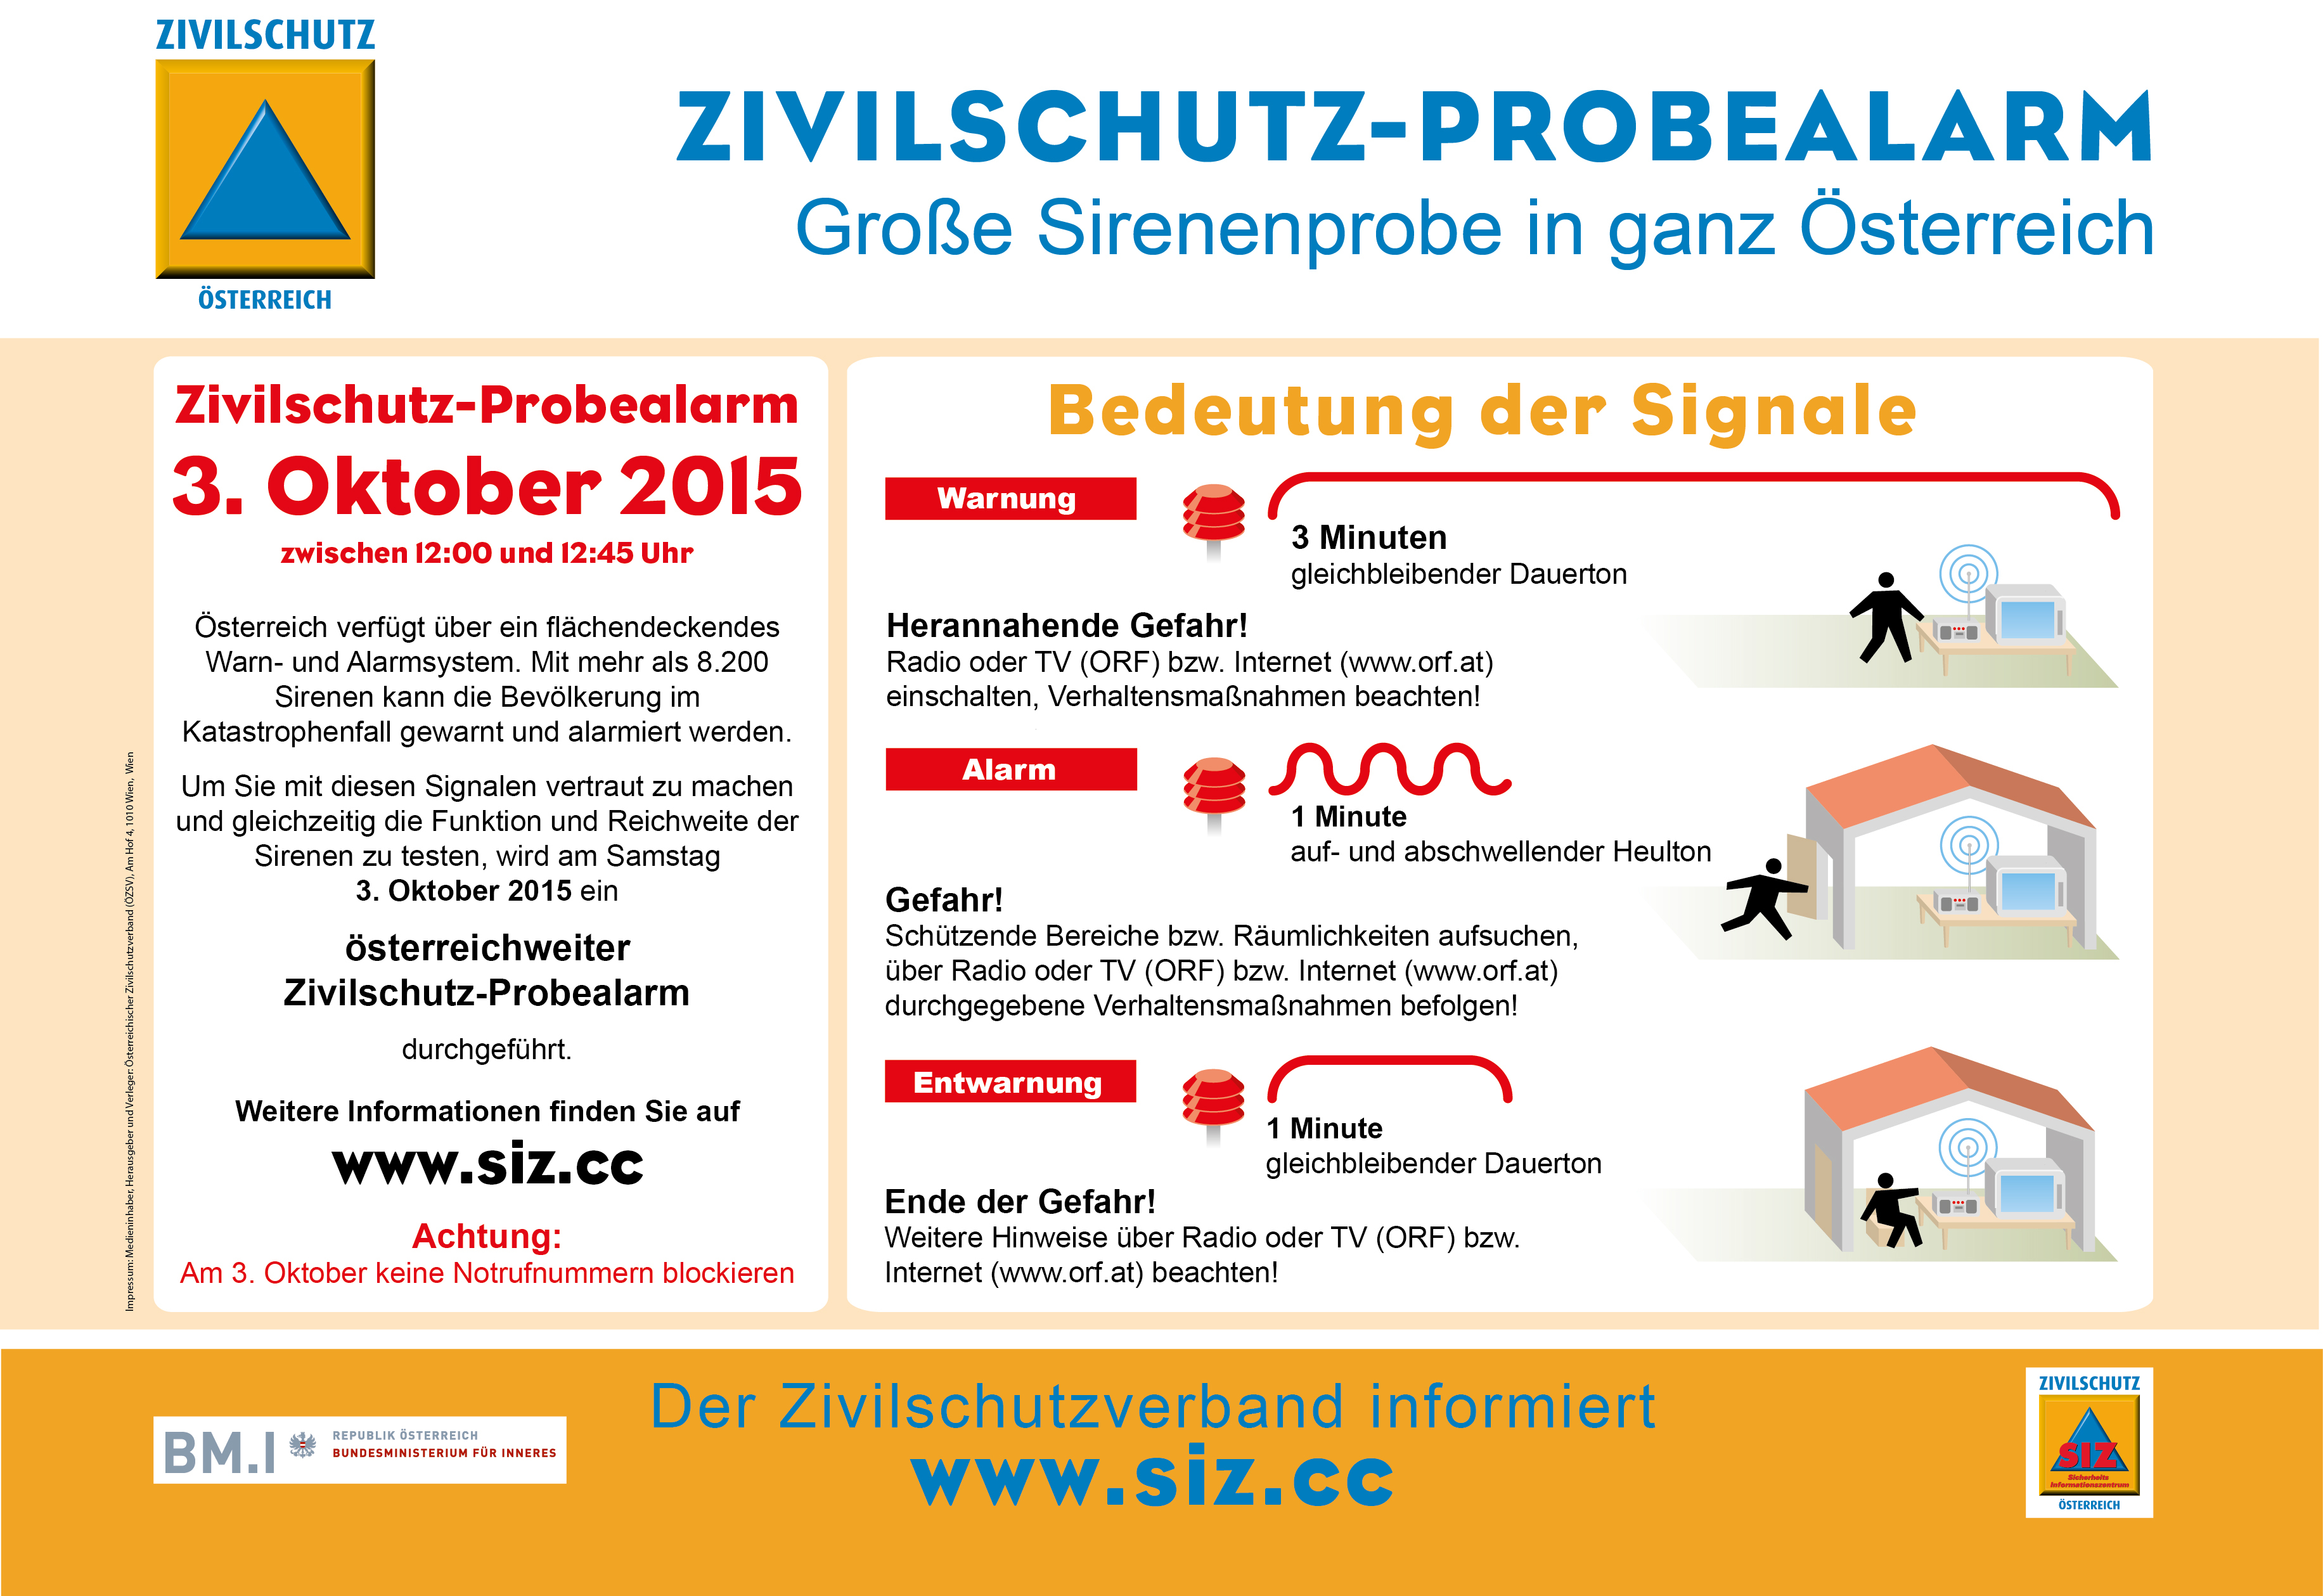 http://www.siz.cc/tools/image.php?image=Zivilschutz_Probealarm_2015_A2.jpg&width=&height=